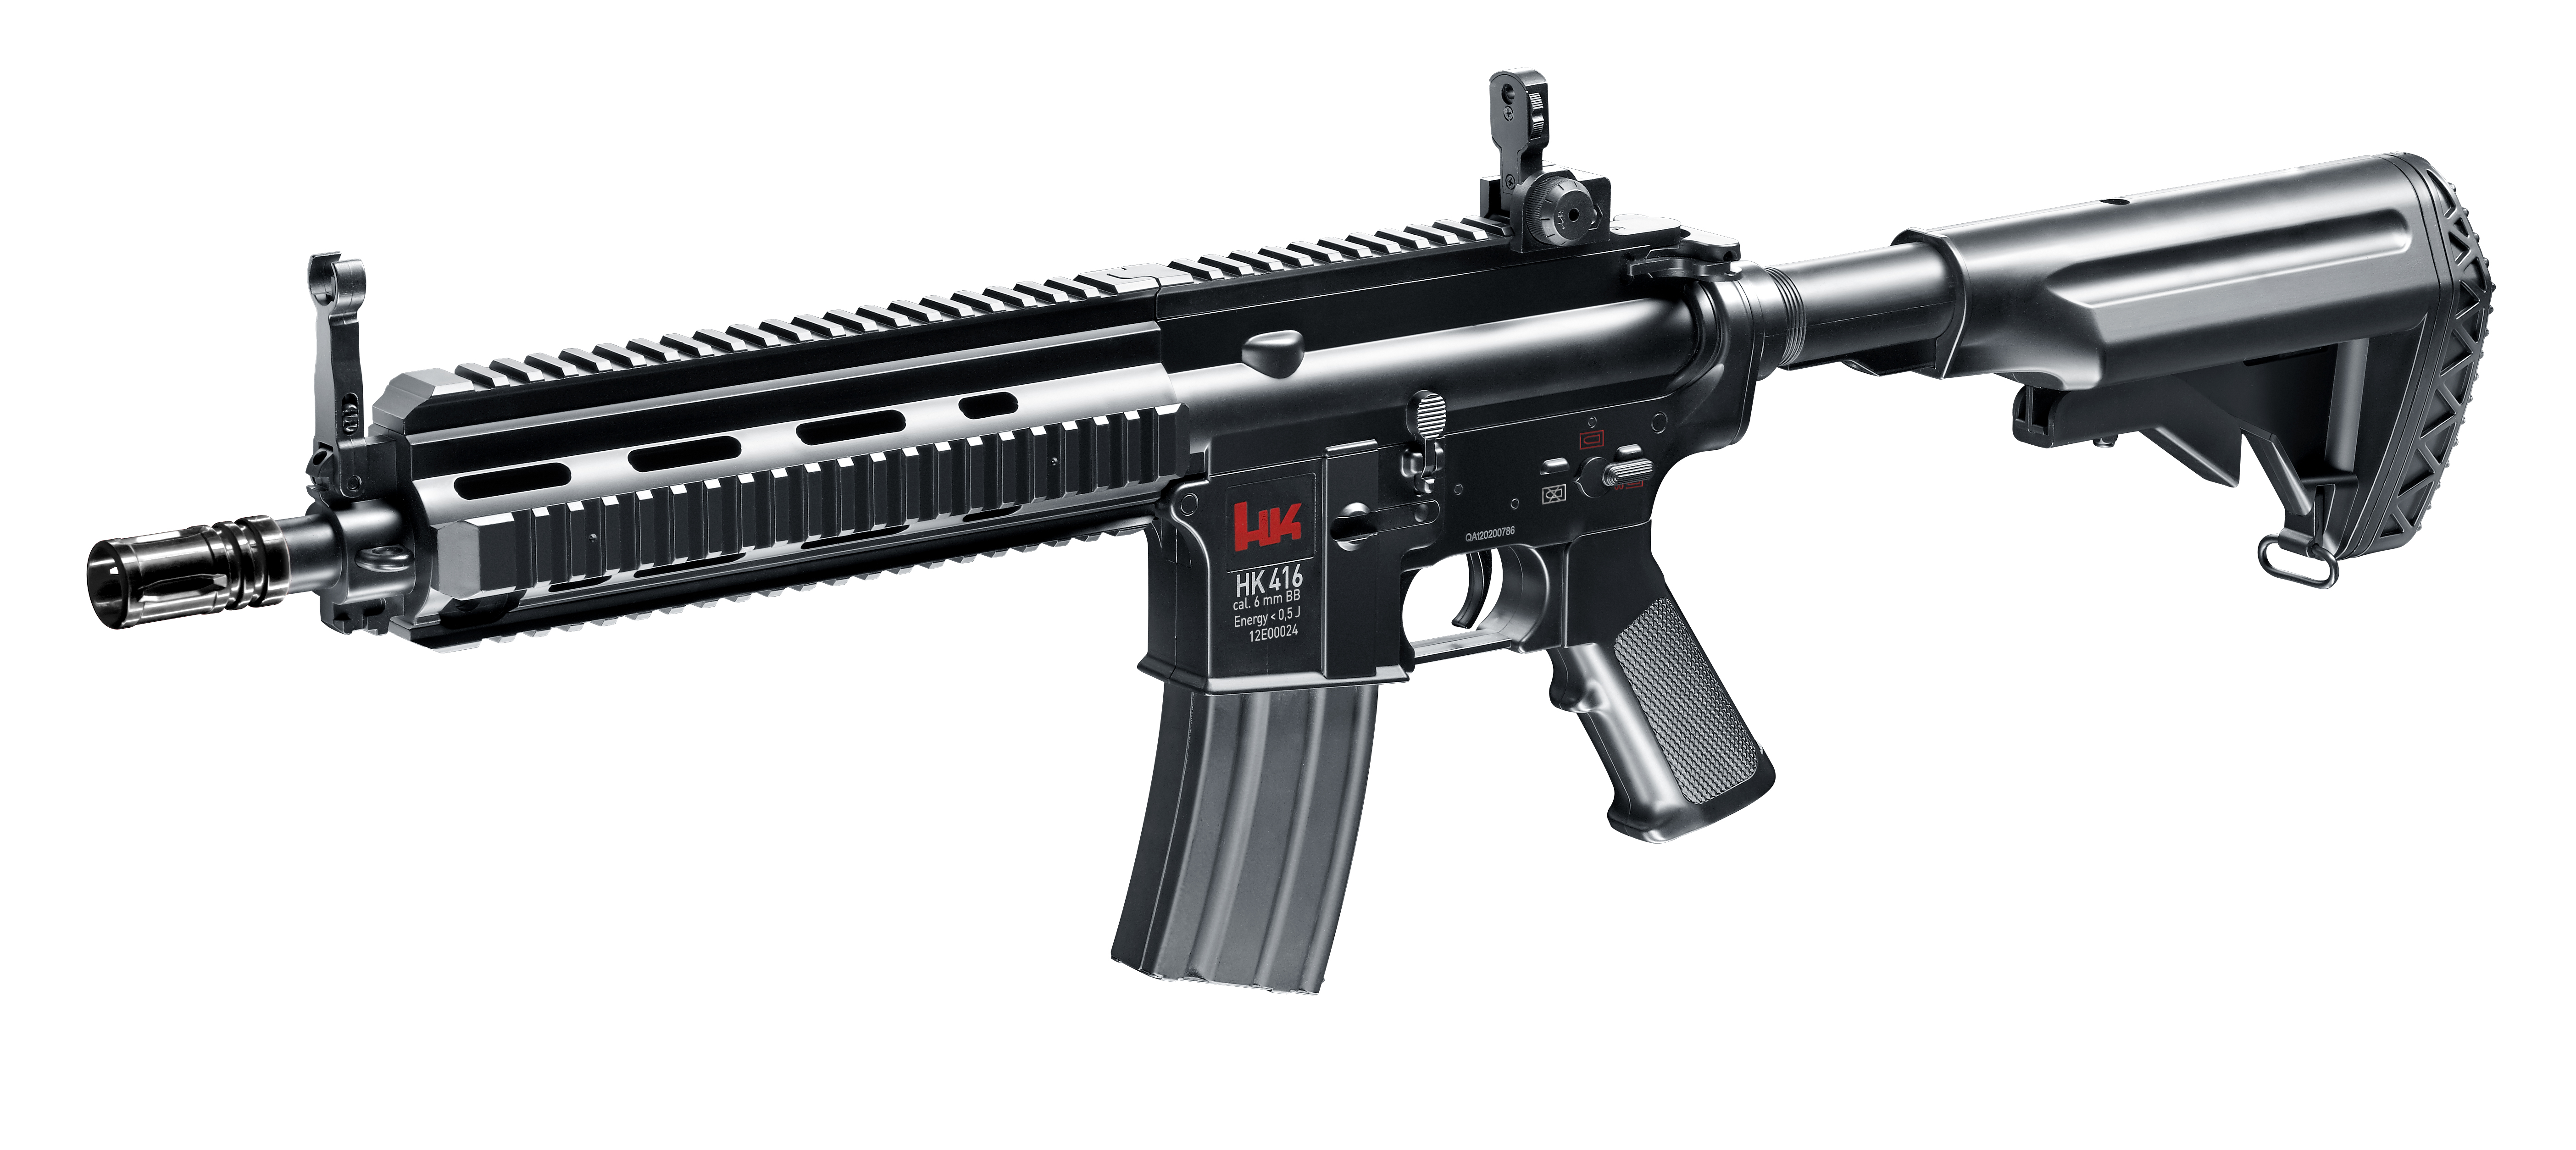 HECKLER & KOCH (Umarex) AEG Rifle HK416 CQB